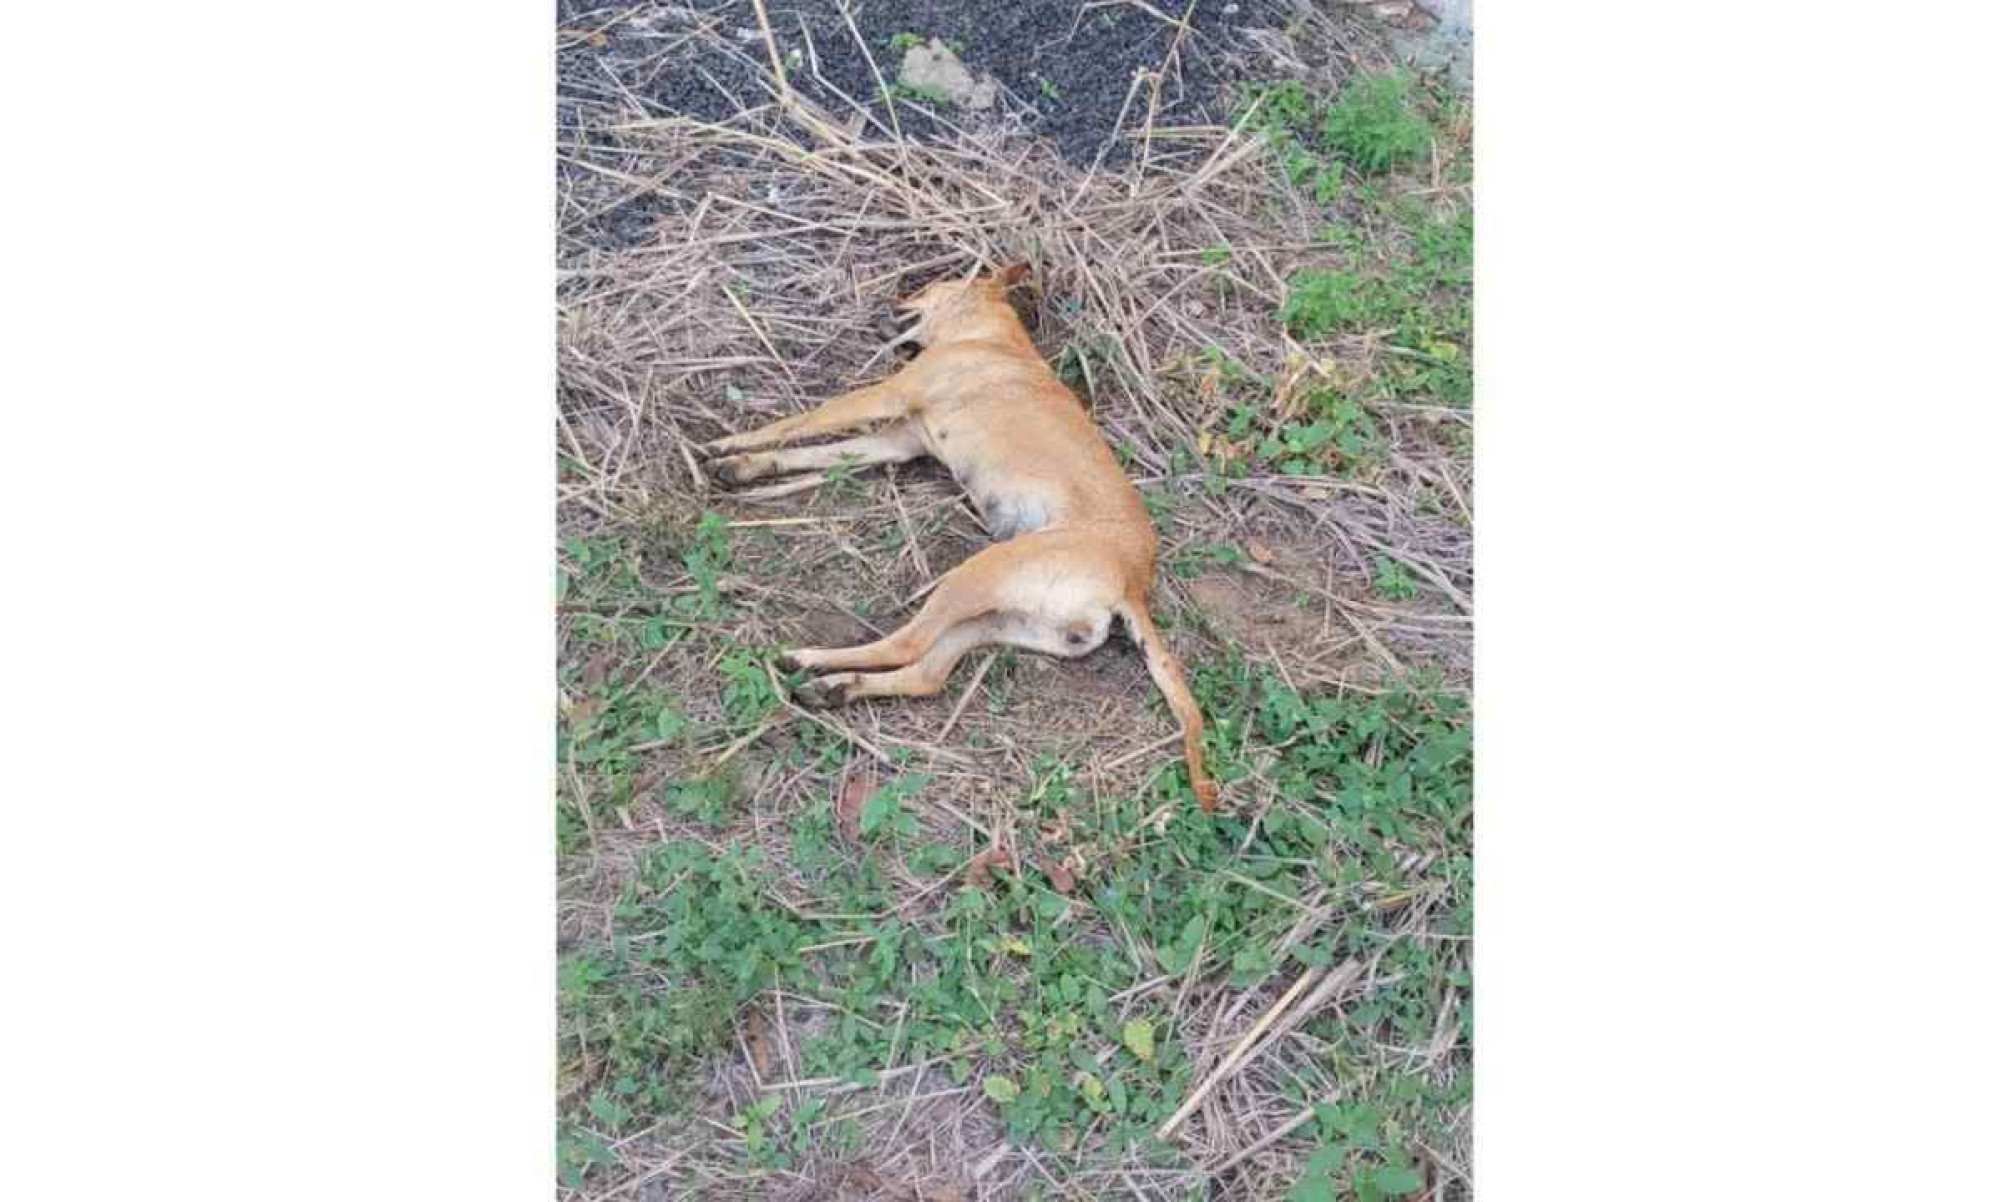 PC de Araxá investiga suposto envenenamento que matou sete cães